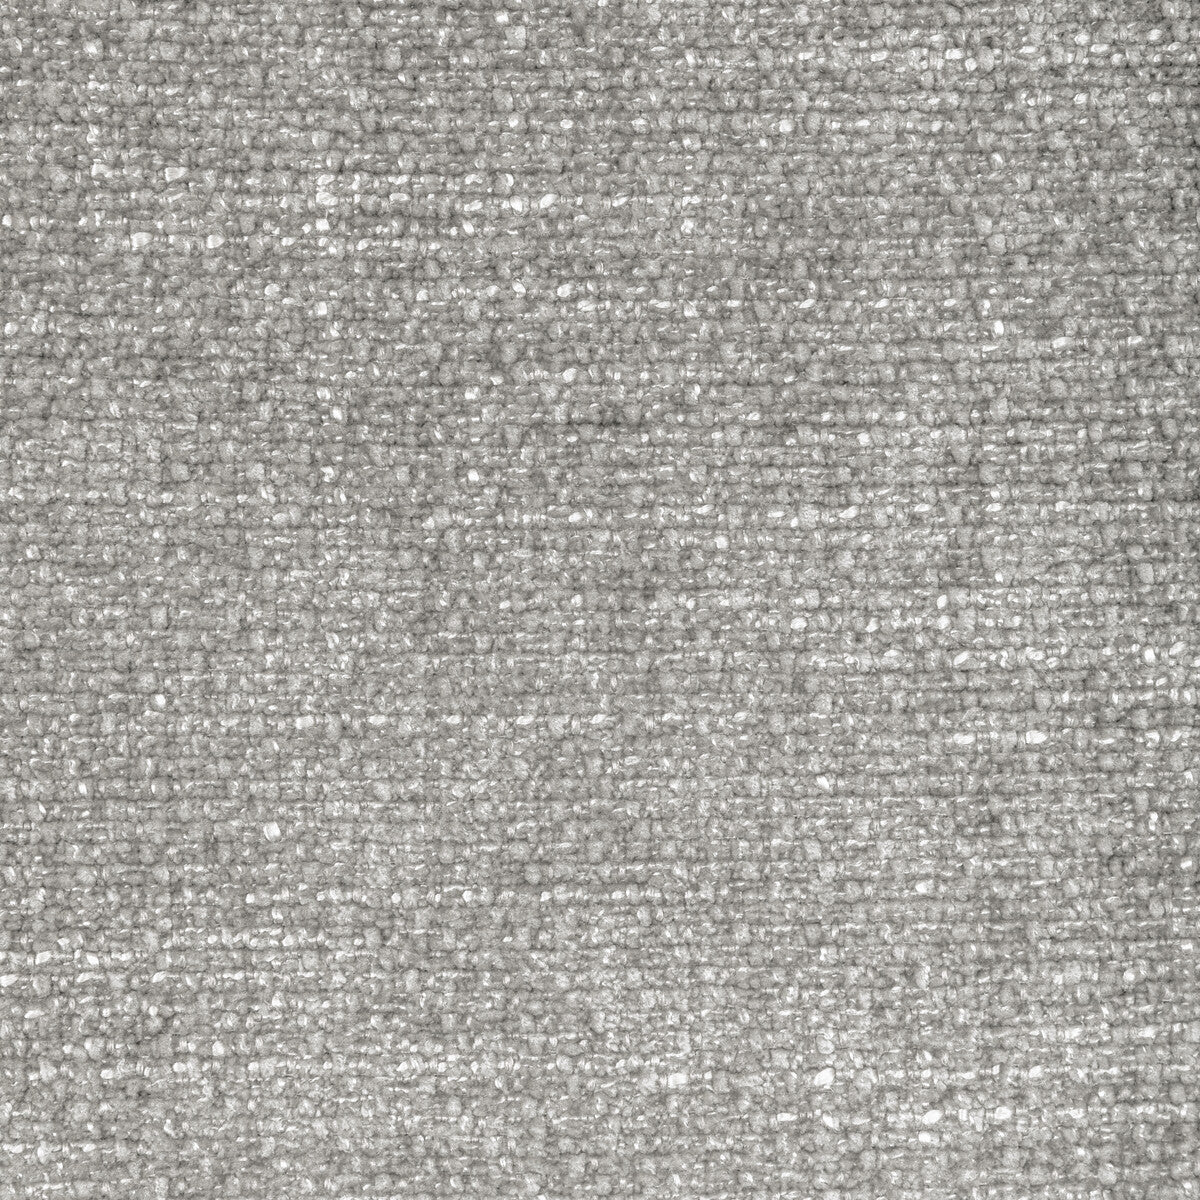 Kravet Smart fabric in 36578-11 color - pattern 36578.11.0 - by Kravet Smart in the Performance Kravetarmor collection